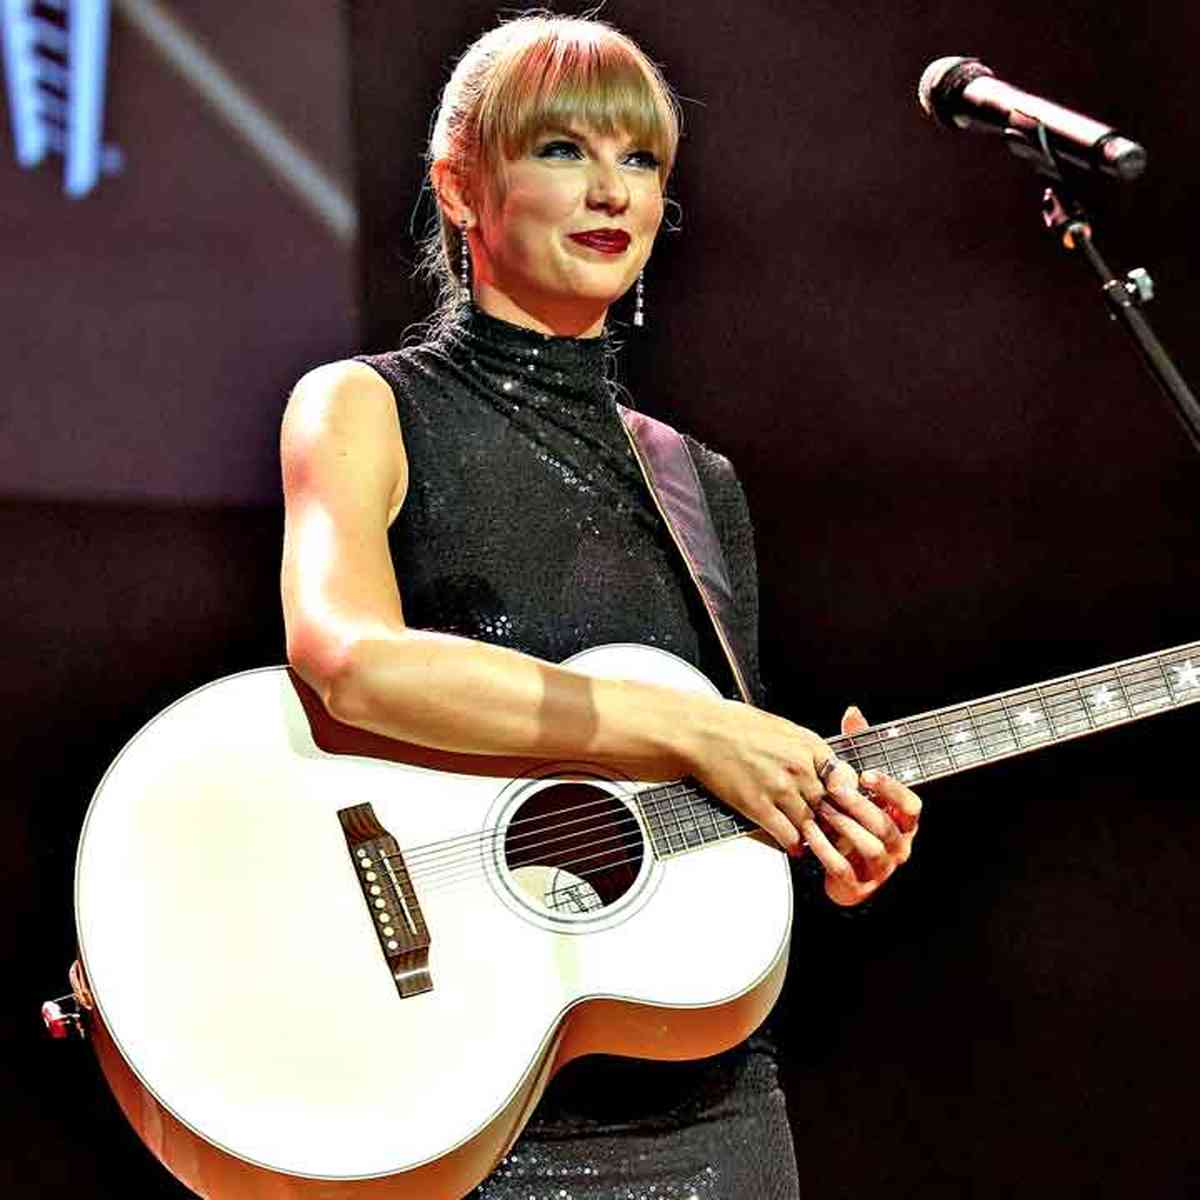 Taylor Swift Brasil New York Times: Swift é uma máquina do pop em  reputation, mas a que custo? - Taylor Swift Brasil